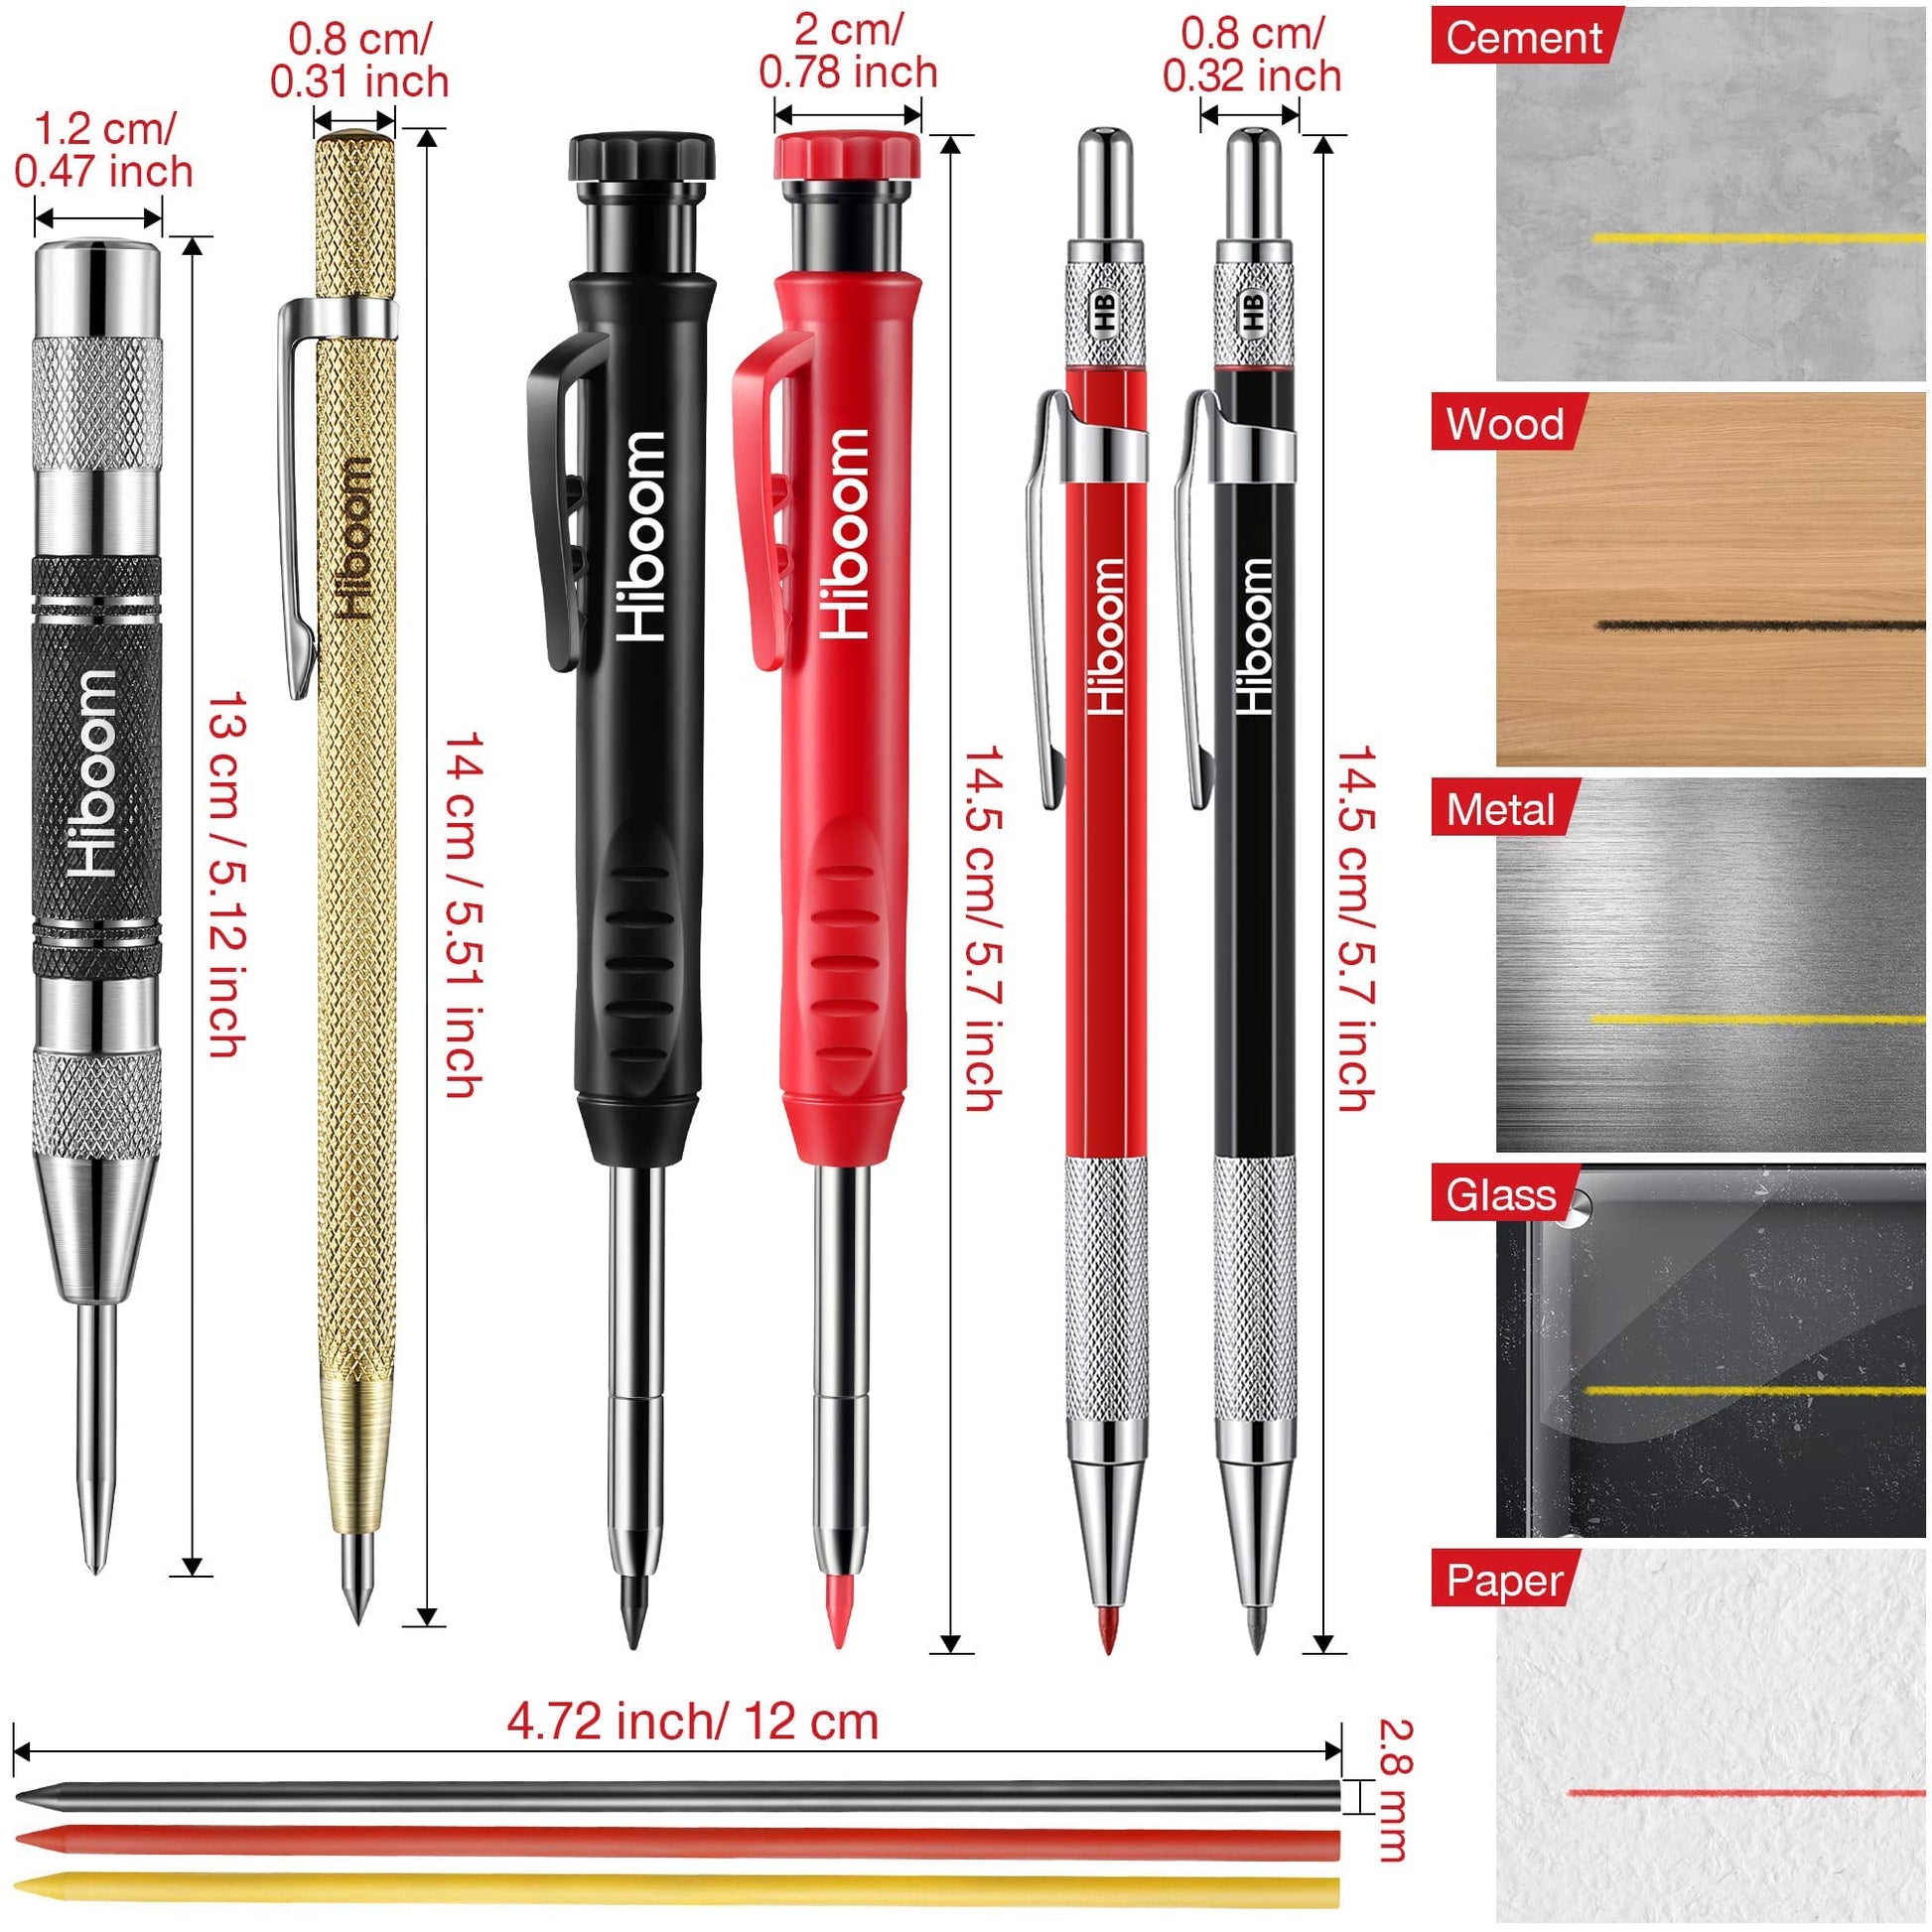 Hiboom Carpenter Pencils with Center Punch, Deep Hole Marking